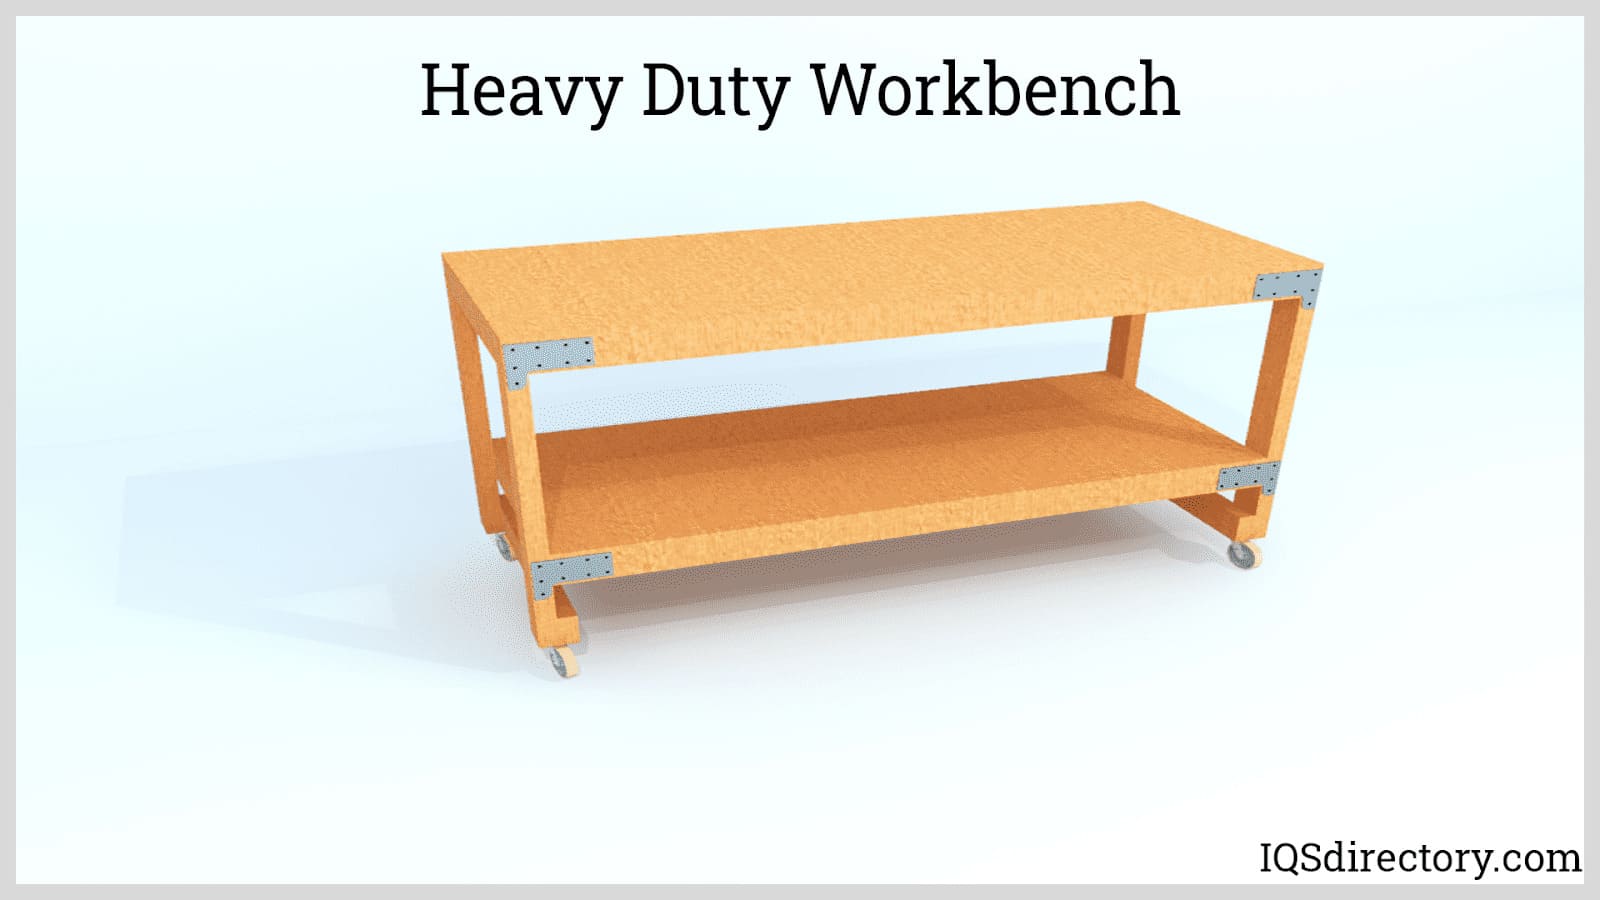 https://www.iqsdirectory.com/articles/work-bench/heavy-duty-workbench.jpg